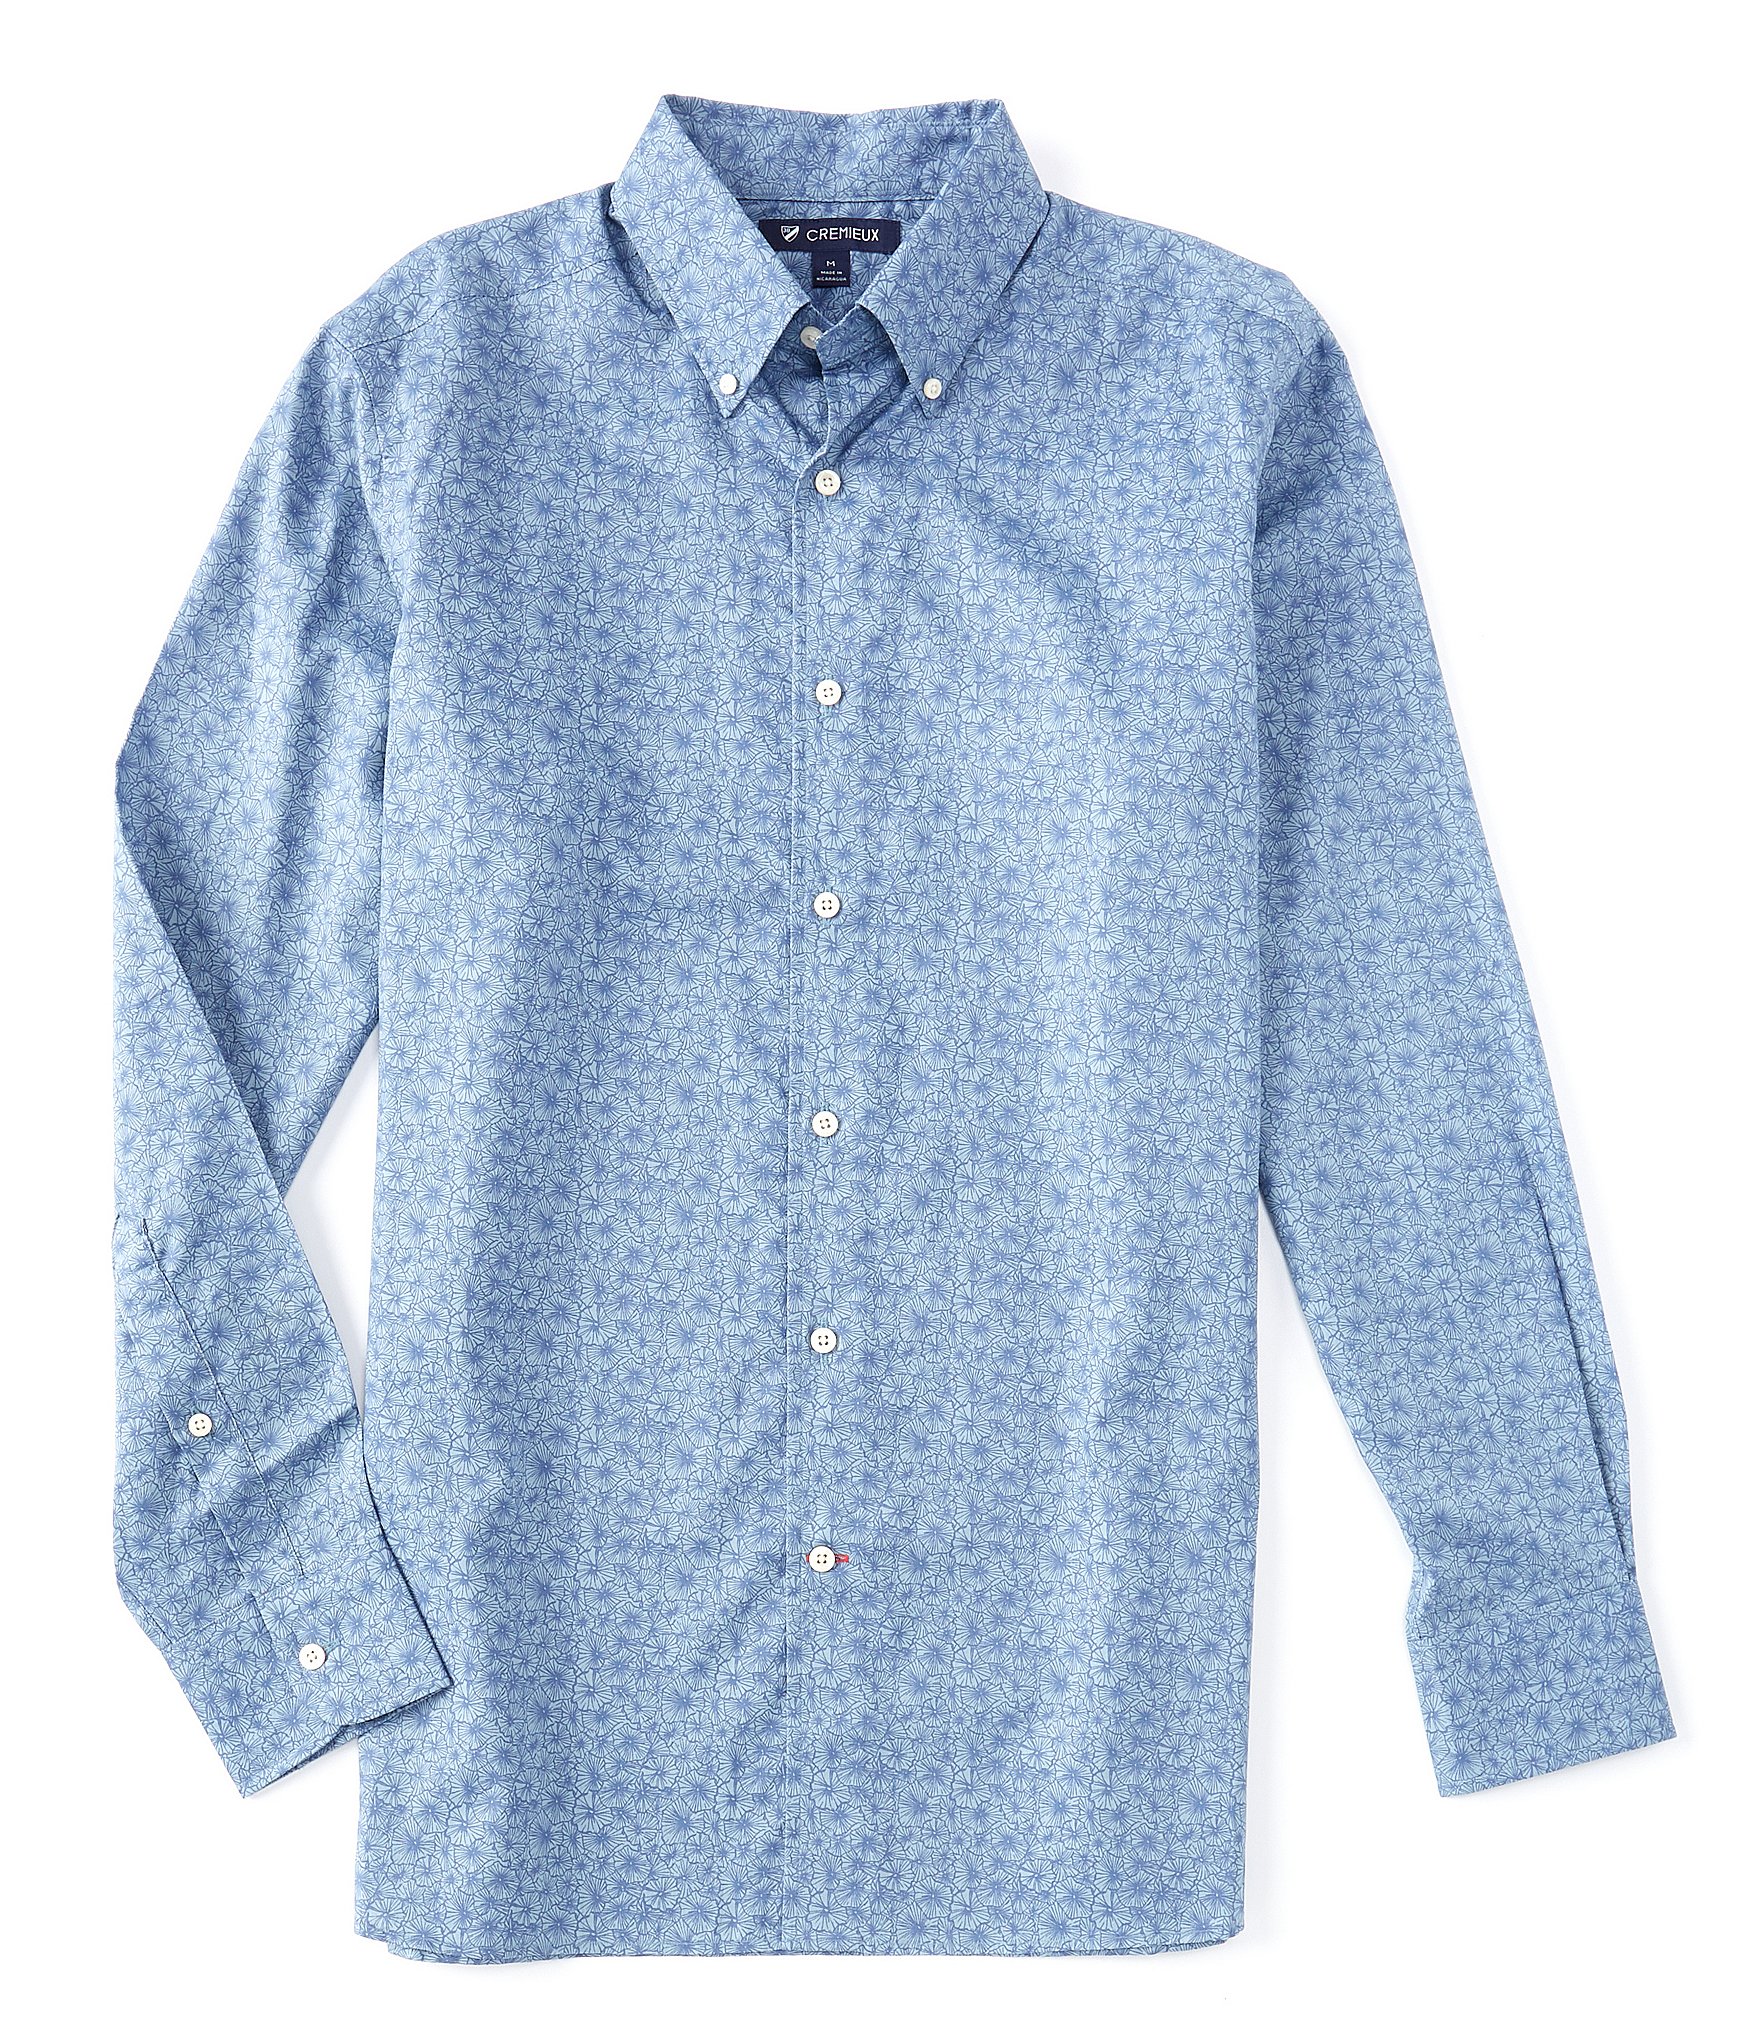 Cremieux Starburst Print Long-Sleeve Woven Shirt | Dillard's